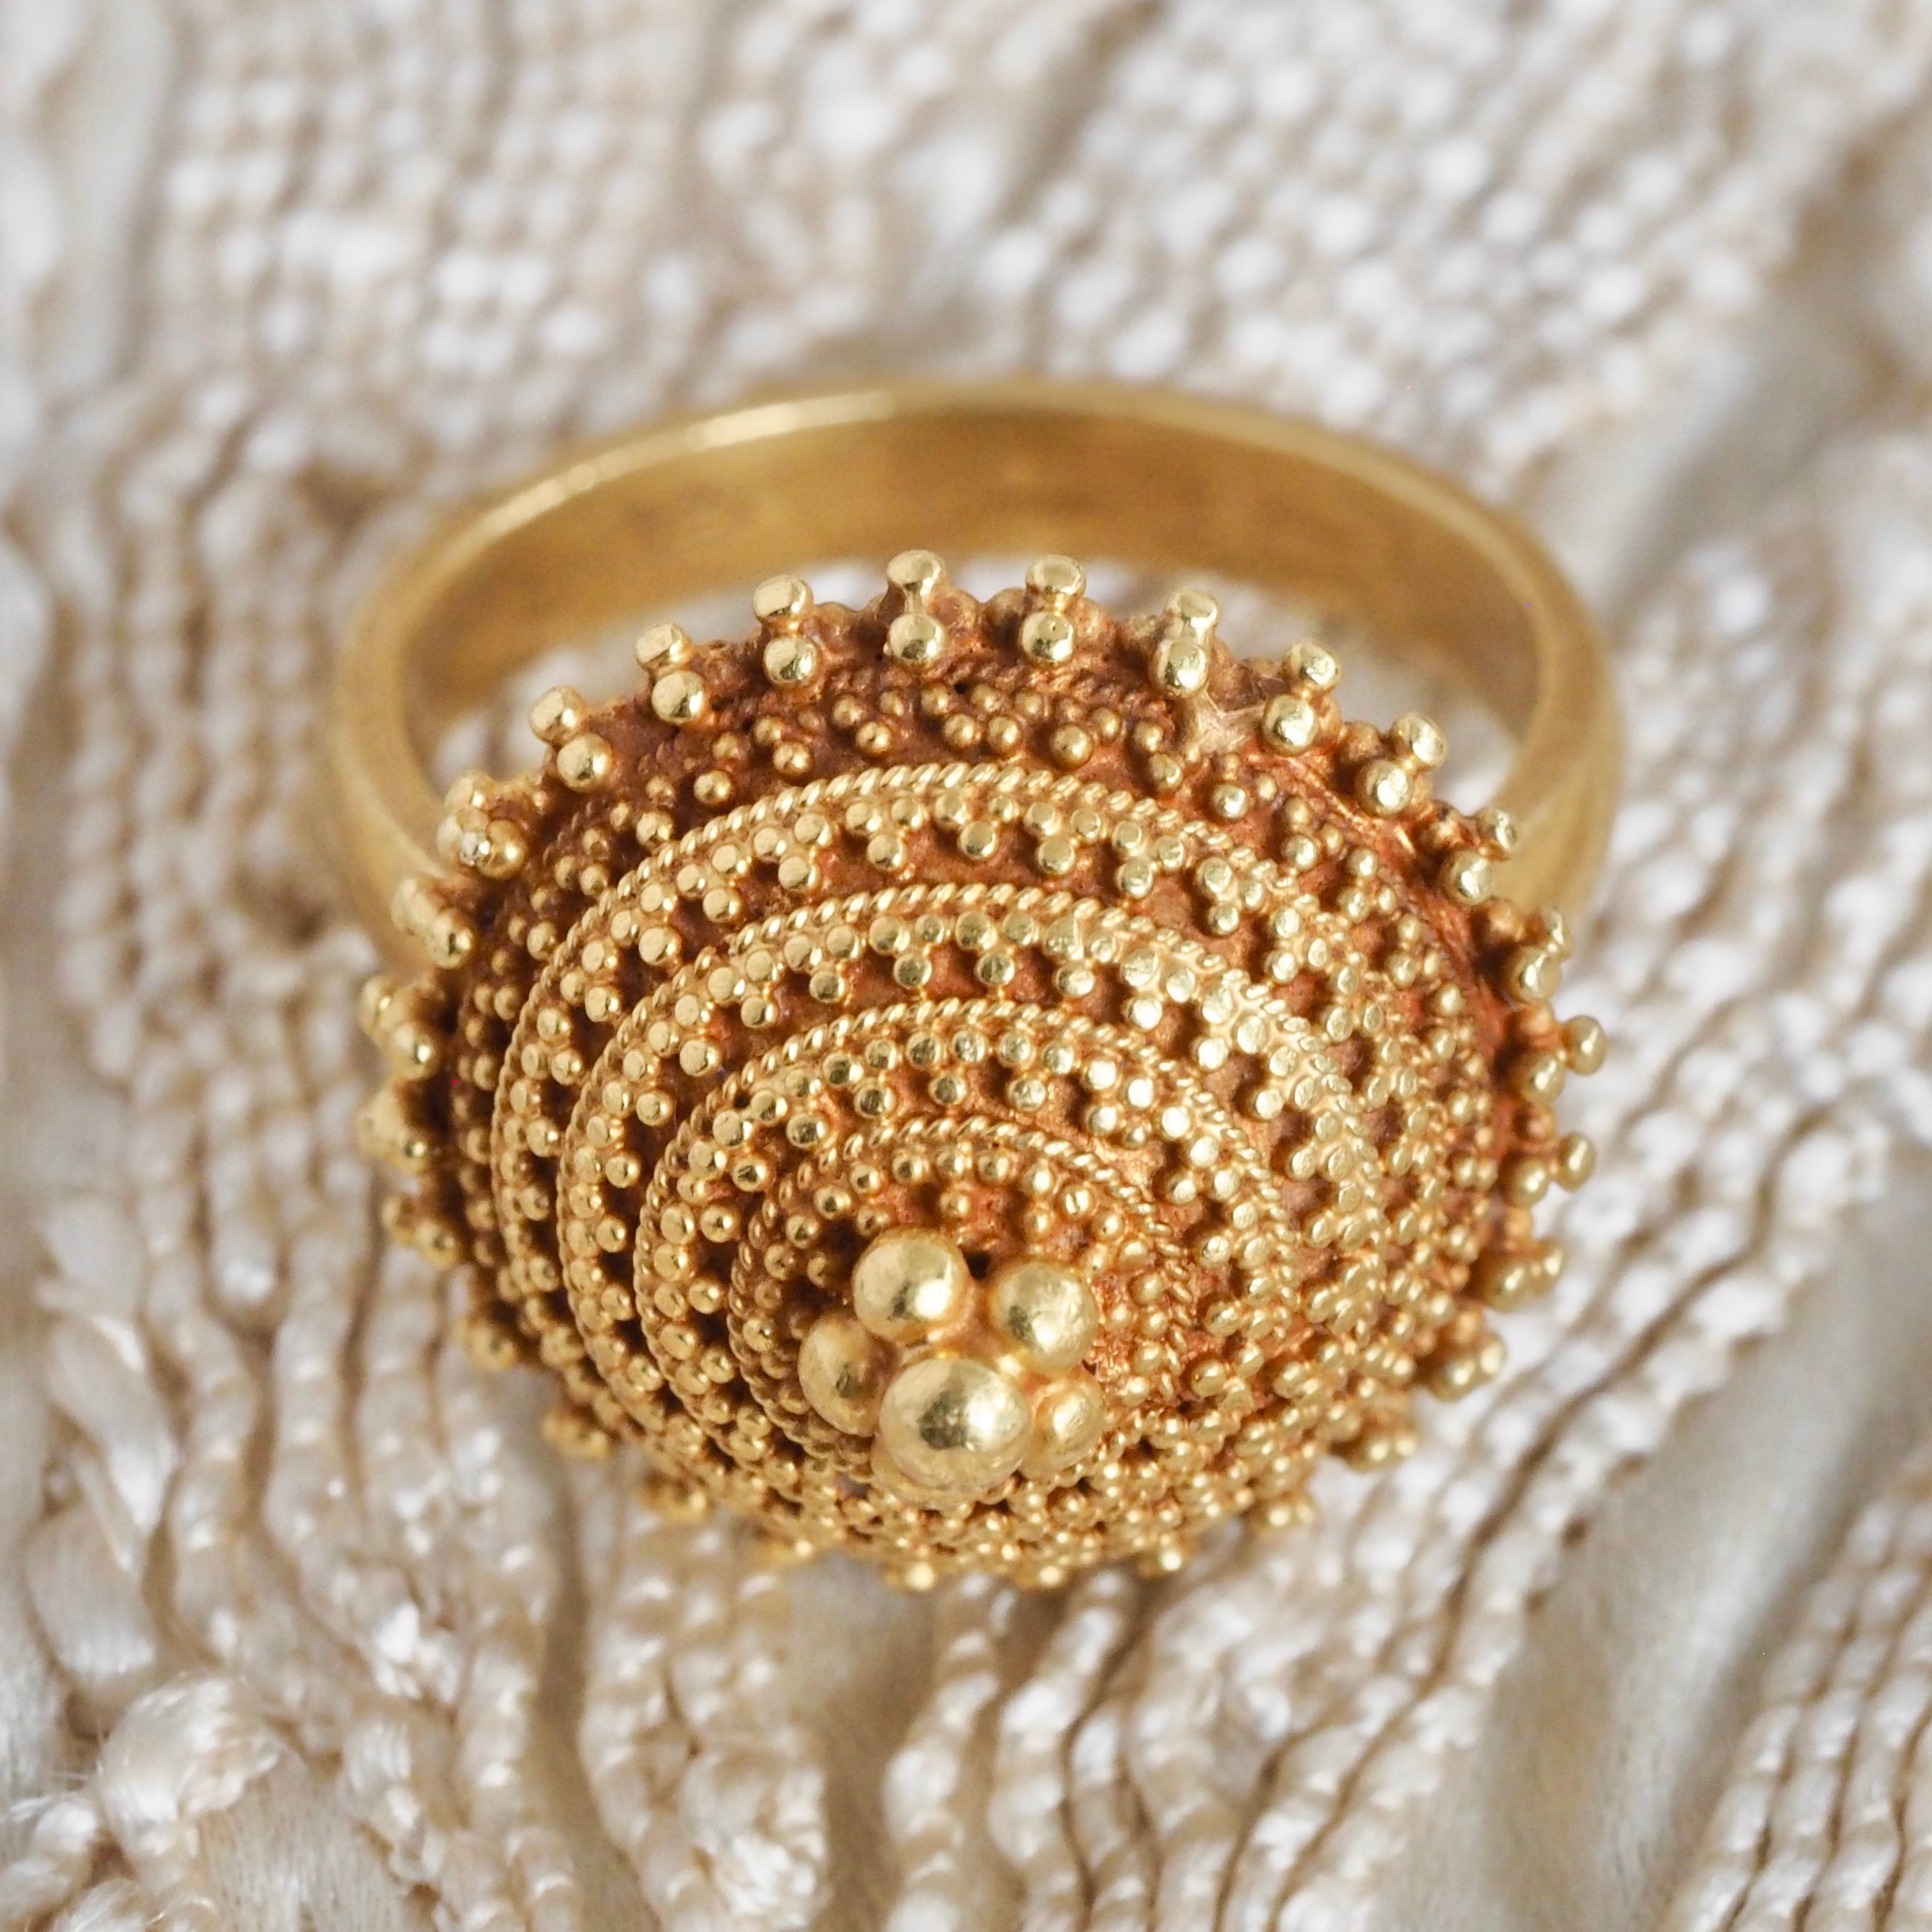 Big Gold Finger Ring Designs 2019 | Indian Jewellery Design 2019 - YouTube